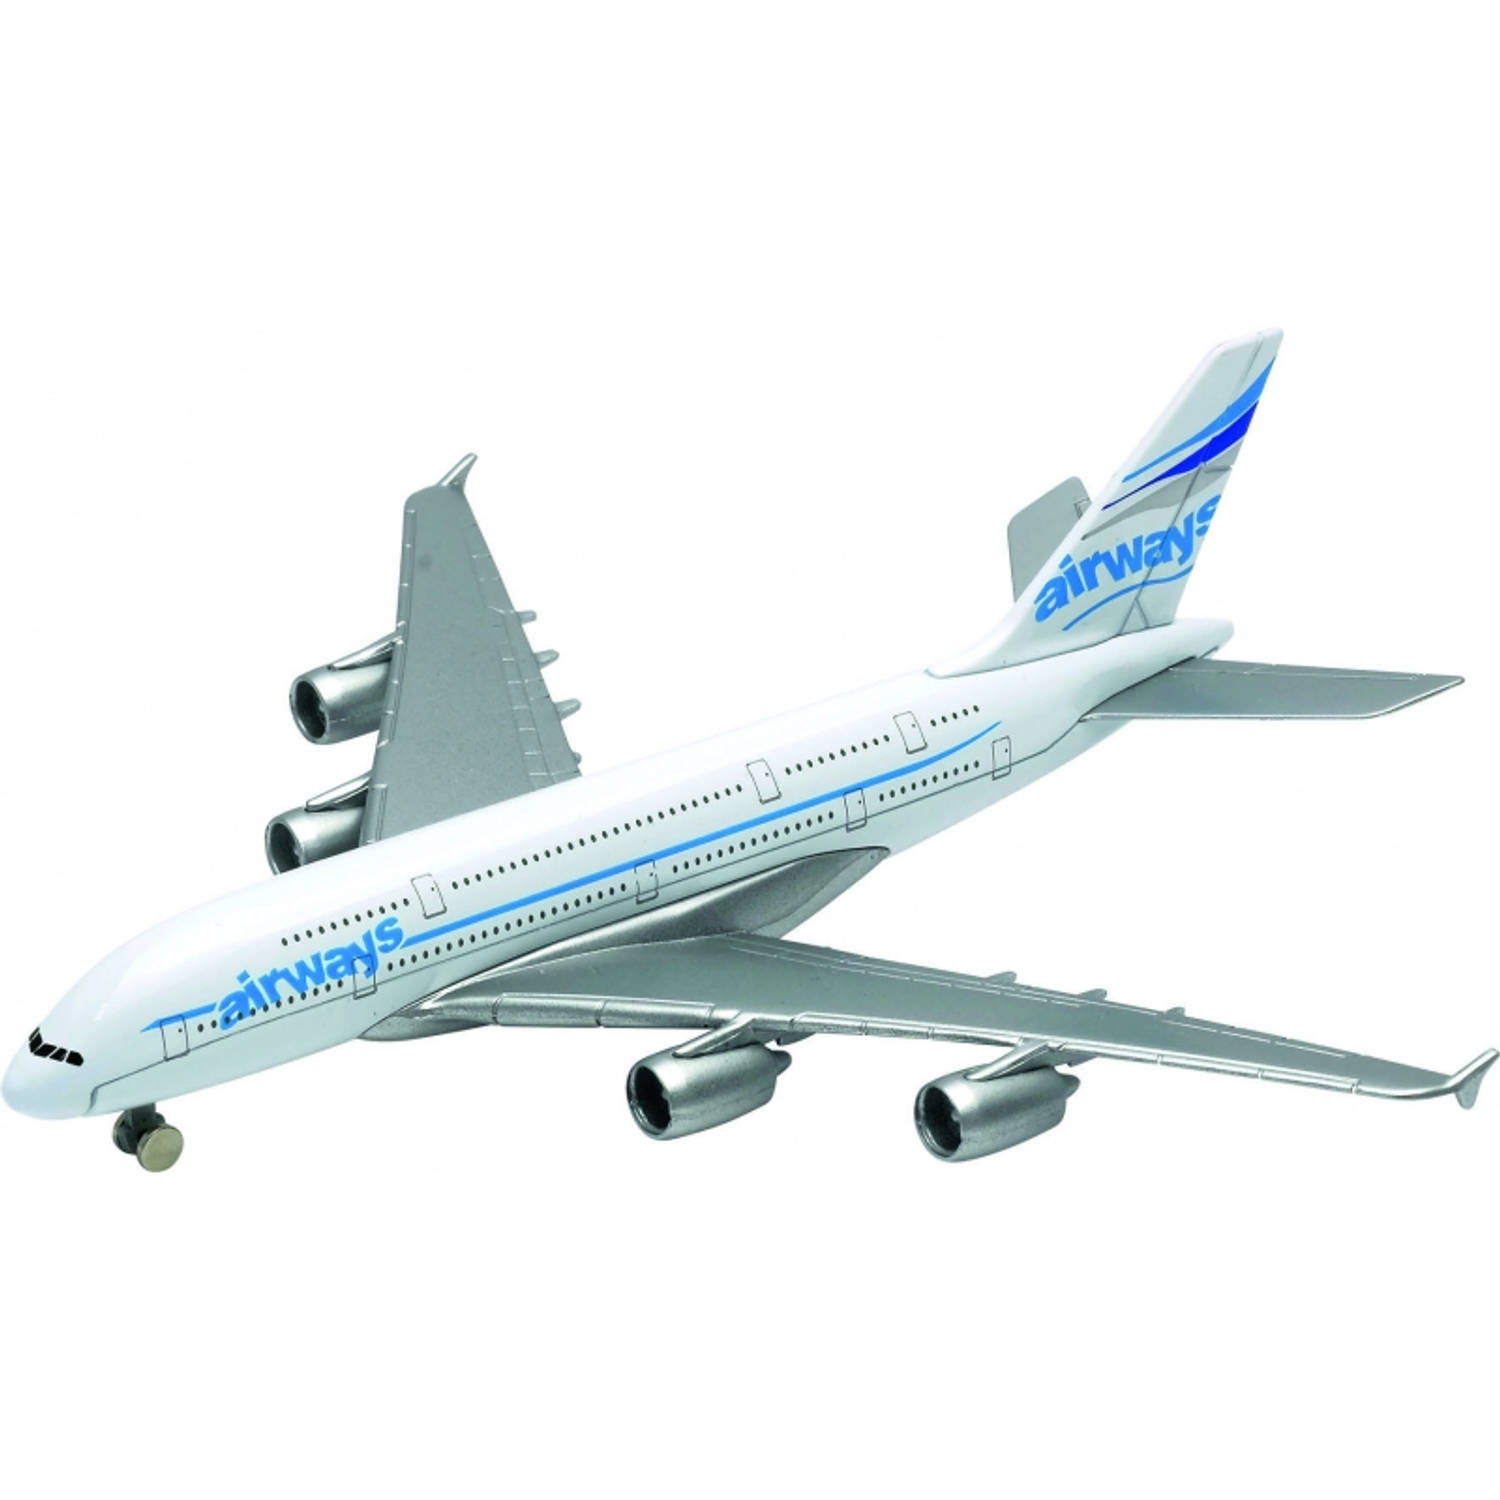 Купить металлический самолет. Самолет металлический игрушка. Welly самолёт. Металлические модели самолетов. Самолёты детские железные.